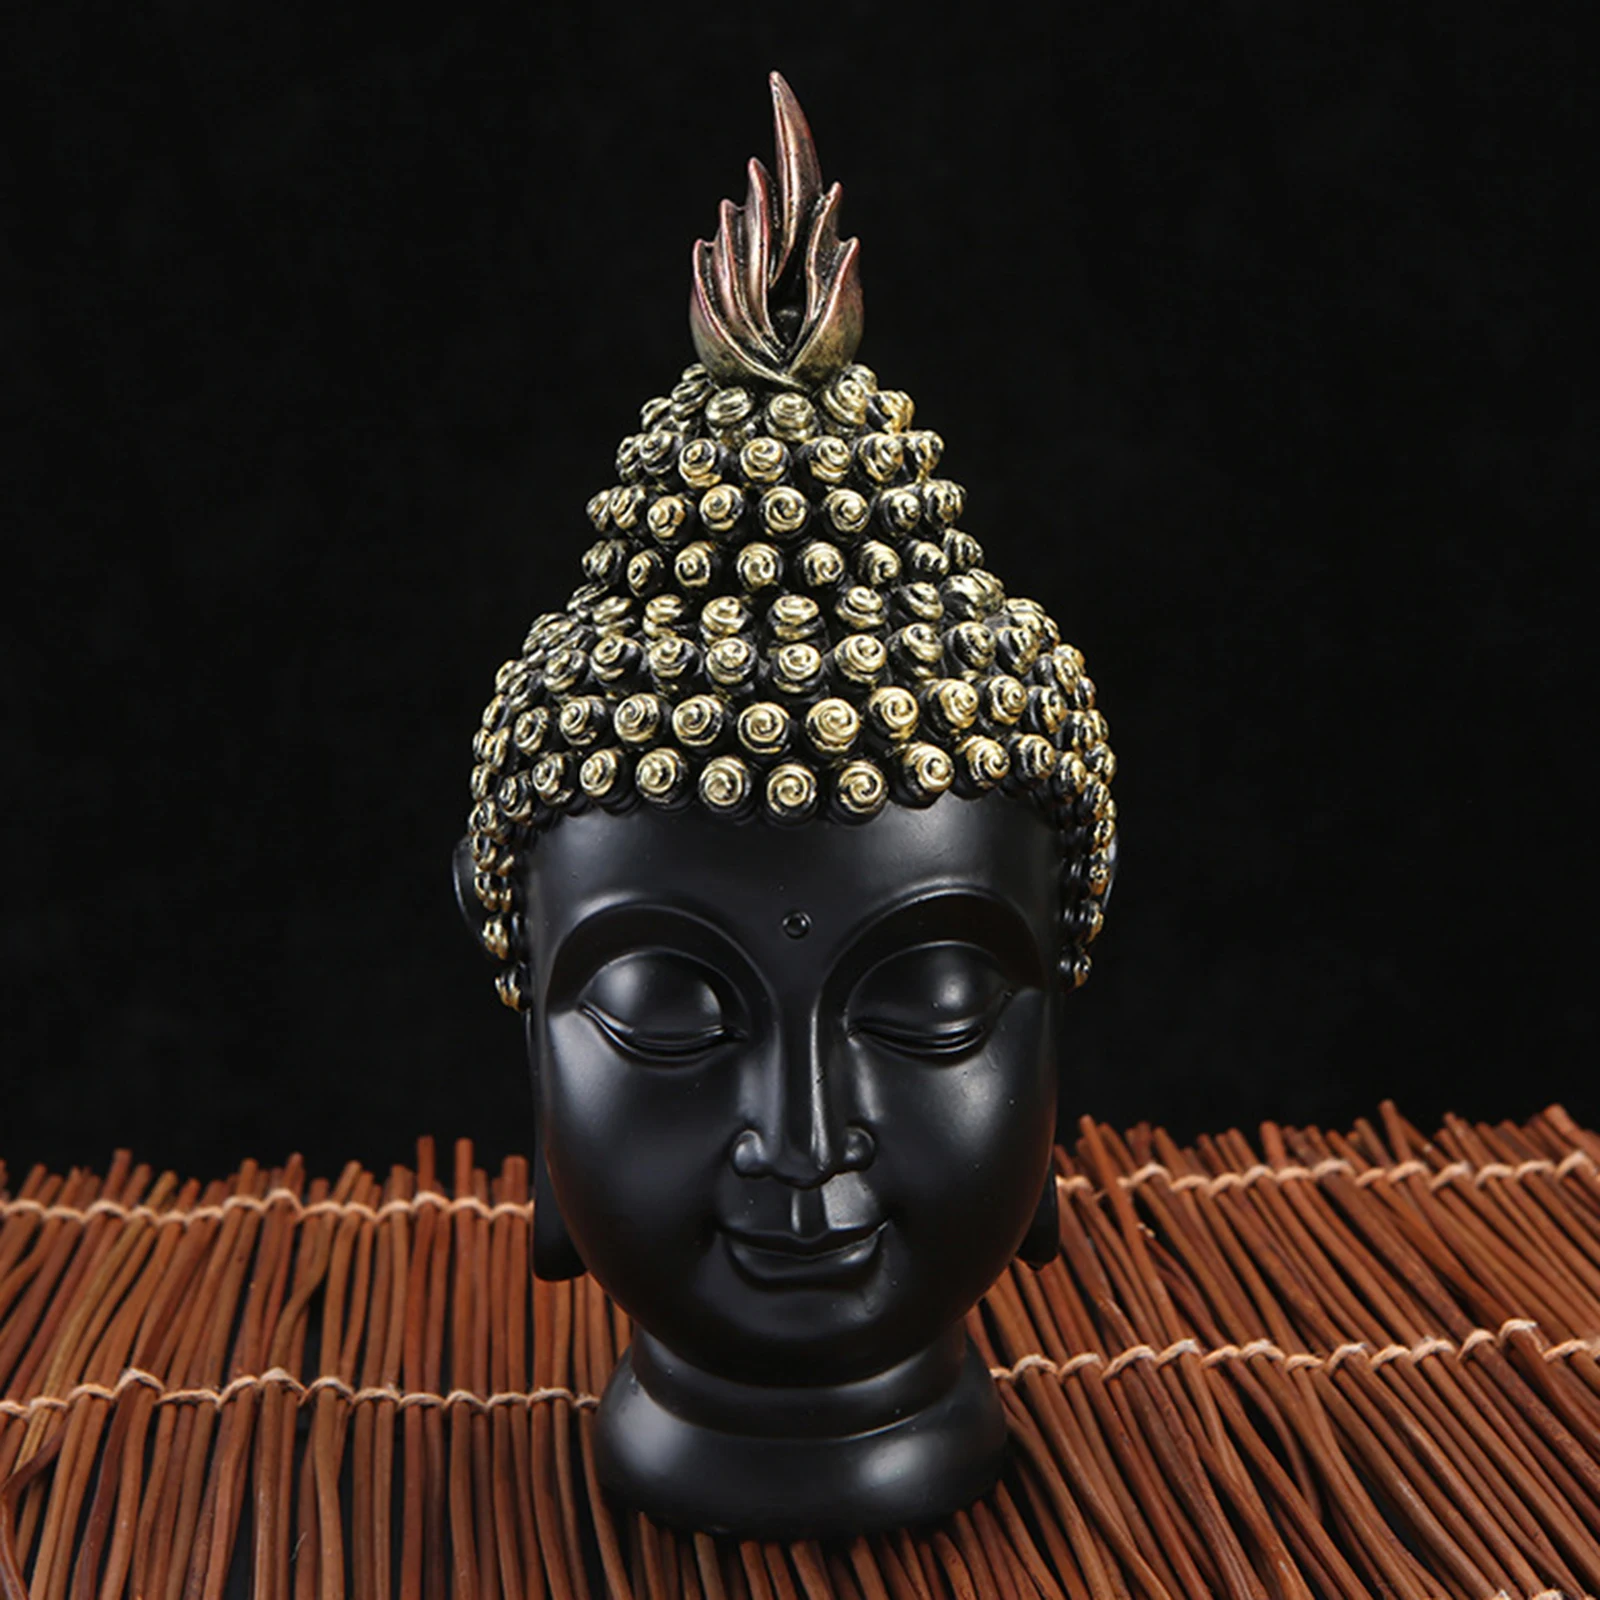 Resin Buddha Head Statue Buddhist Religious Figurine Sculpture Home Decor